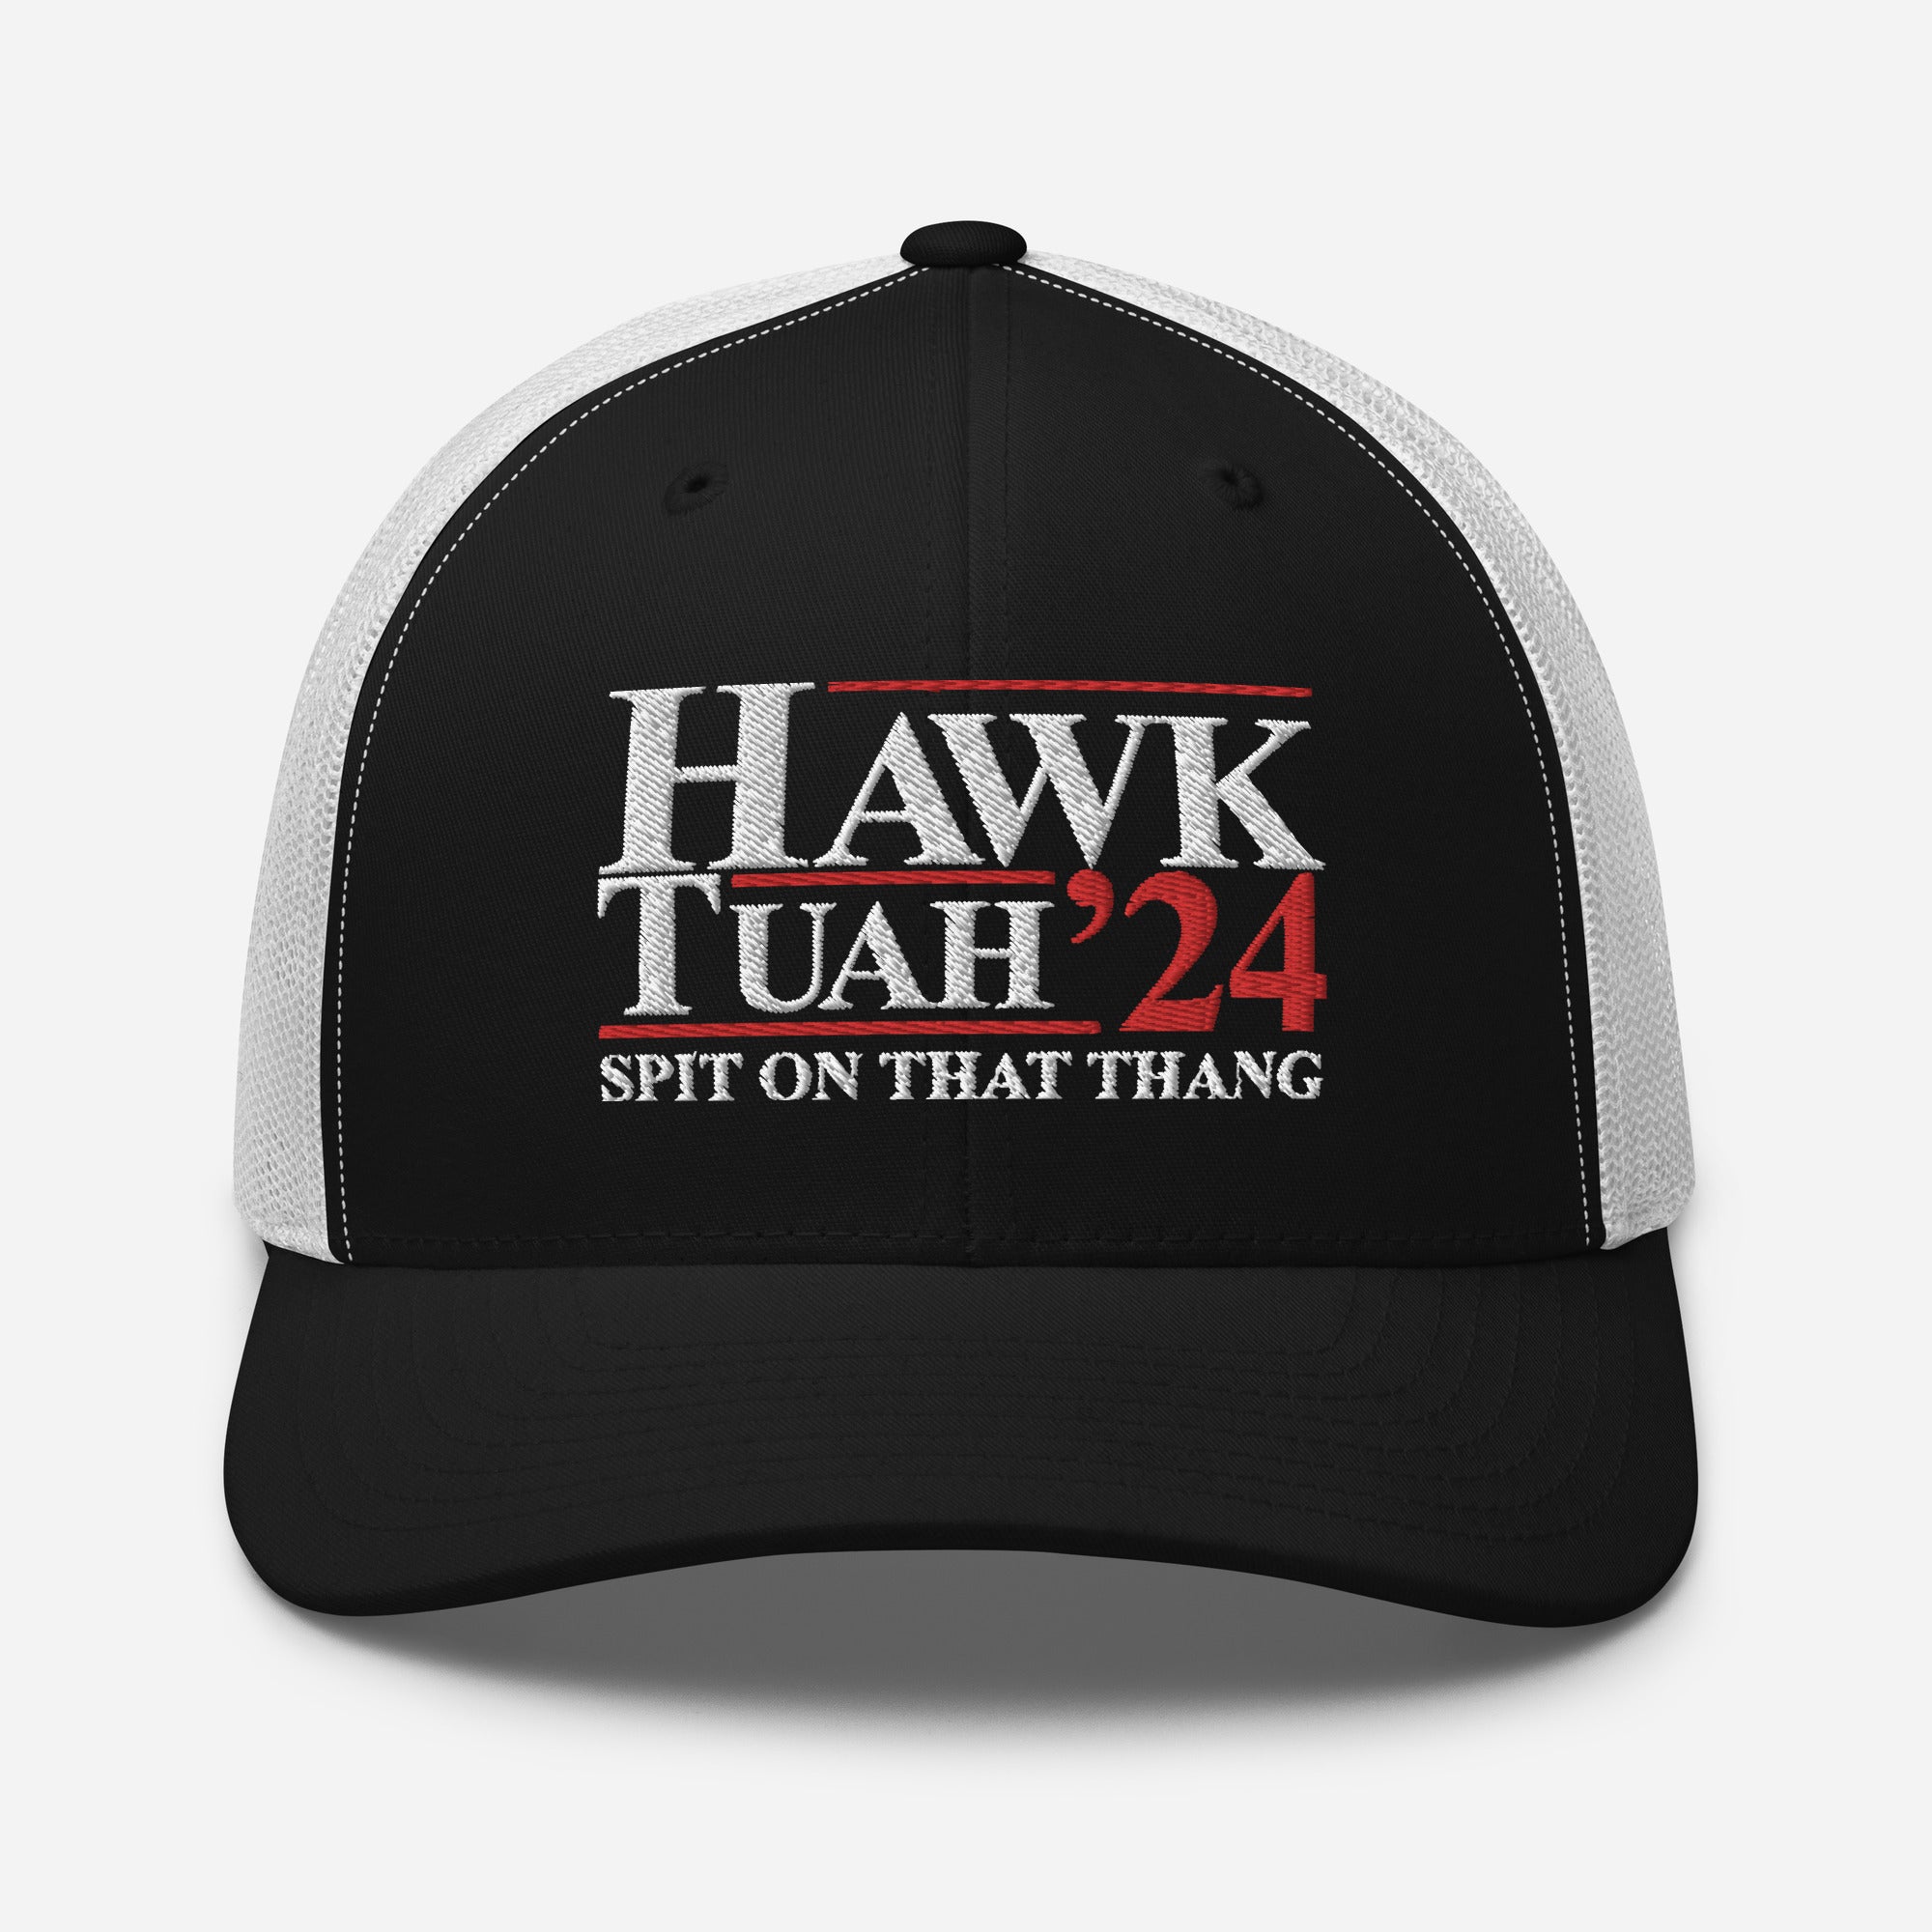 Hawk Tuah 24 Hat